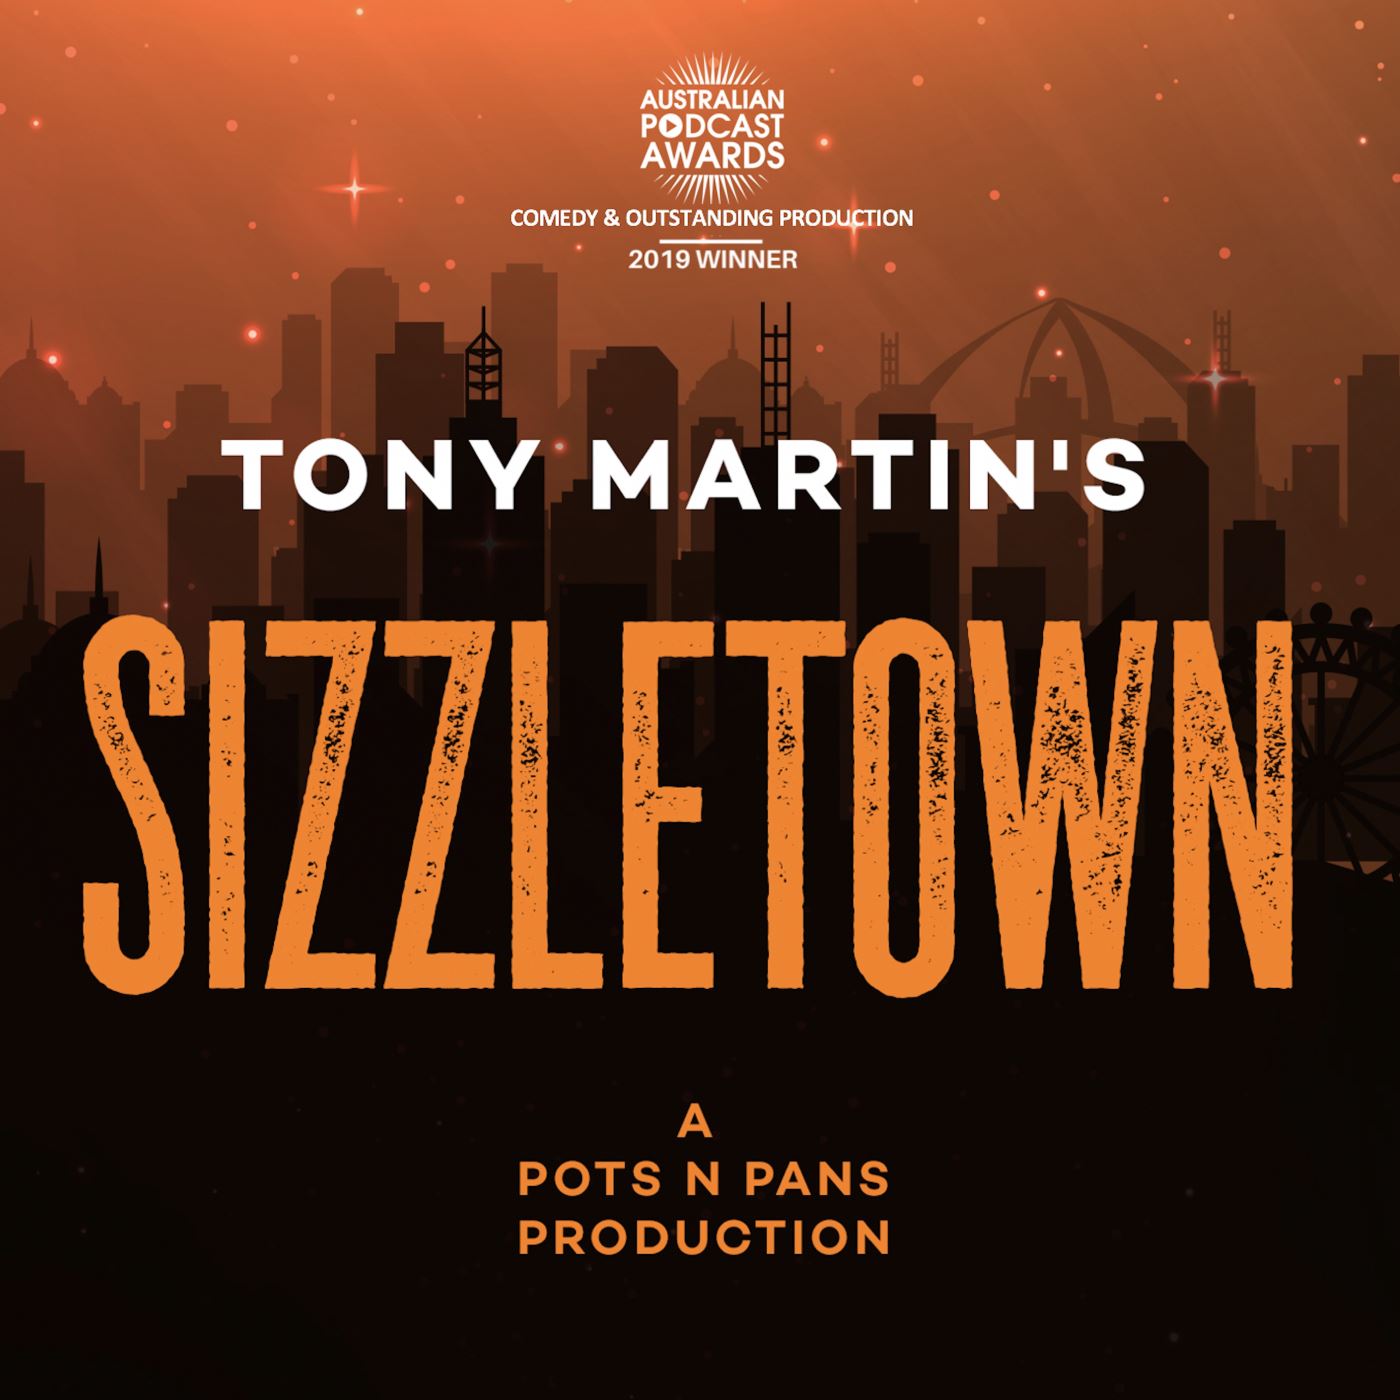 Tony Martin’s SIZZLETOWN:pots n pans productions